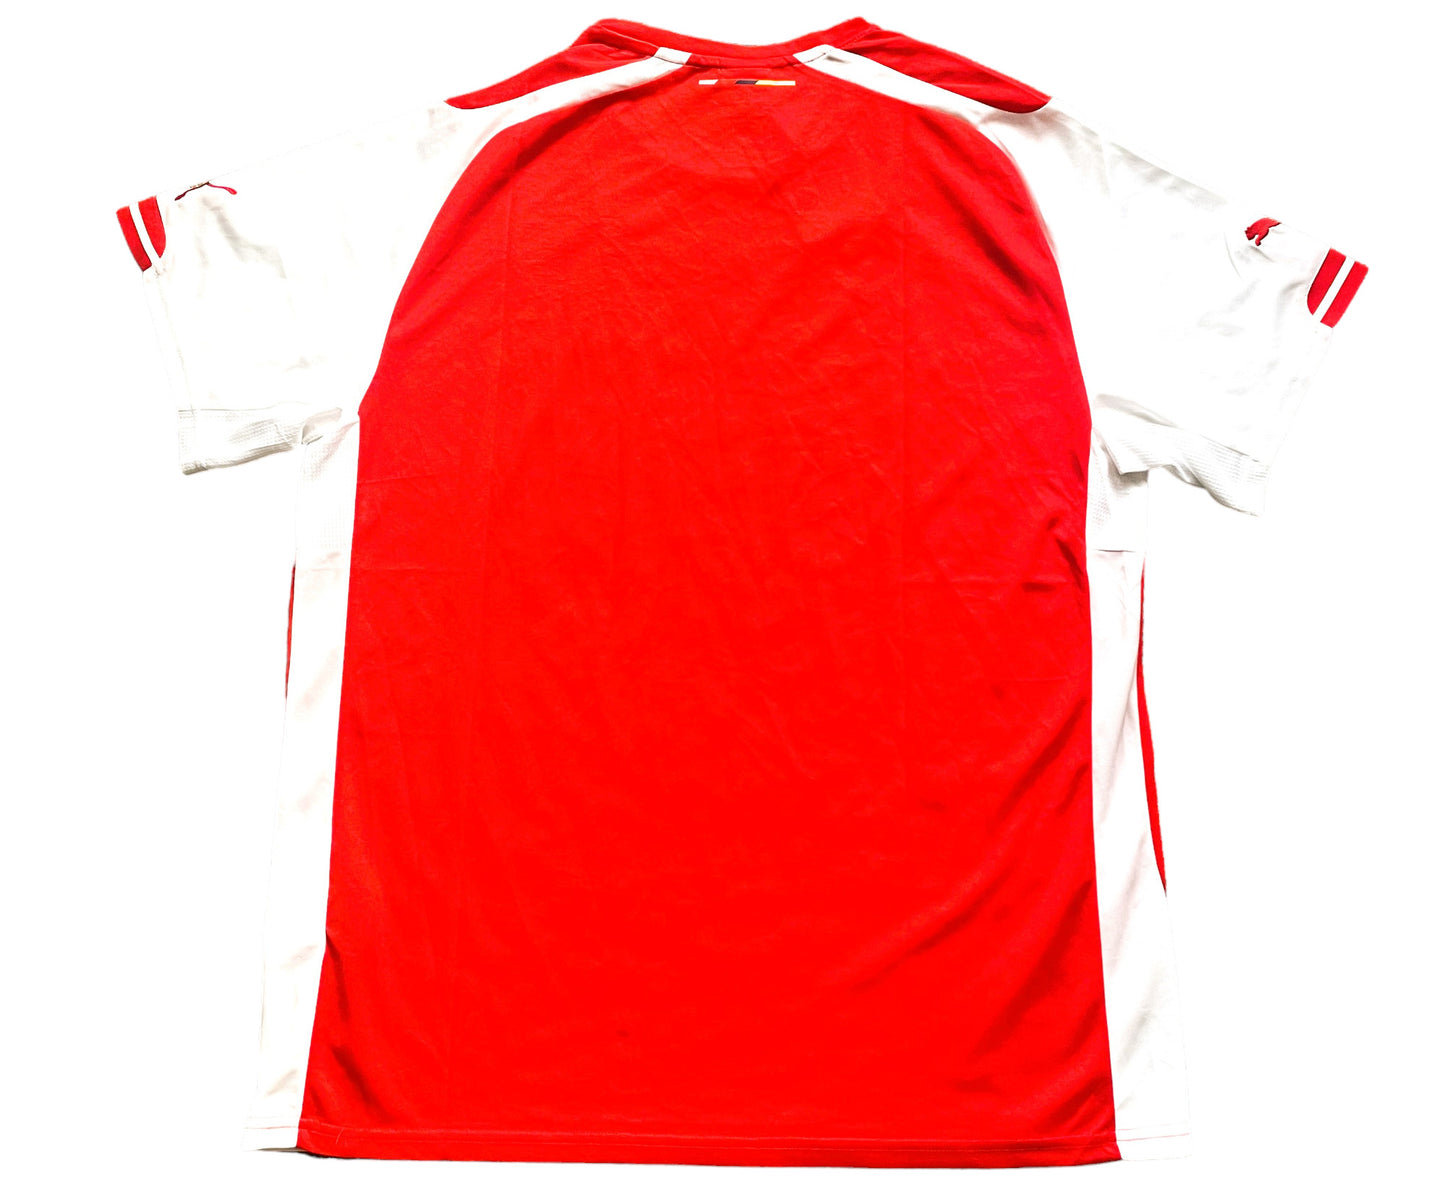 Arsenal 2014 Home Shirt (excellent) Adults XL BNWT